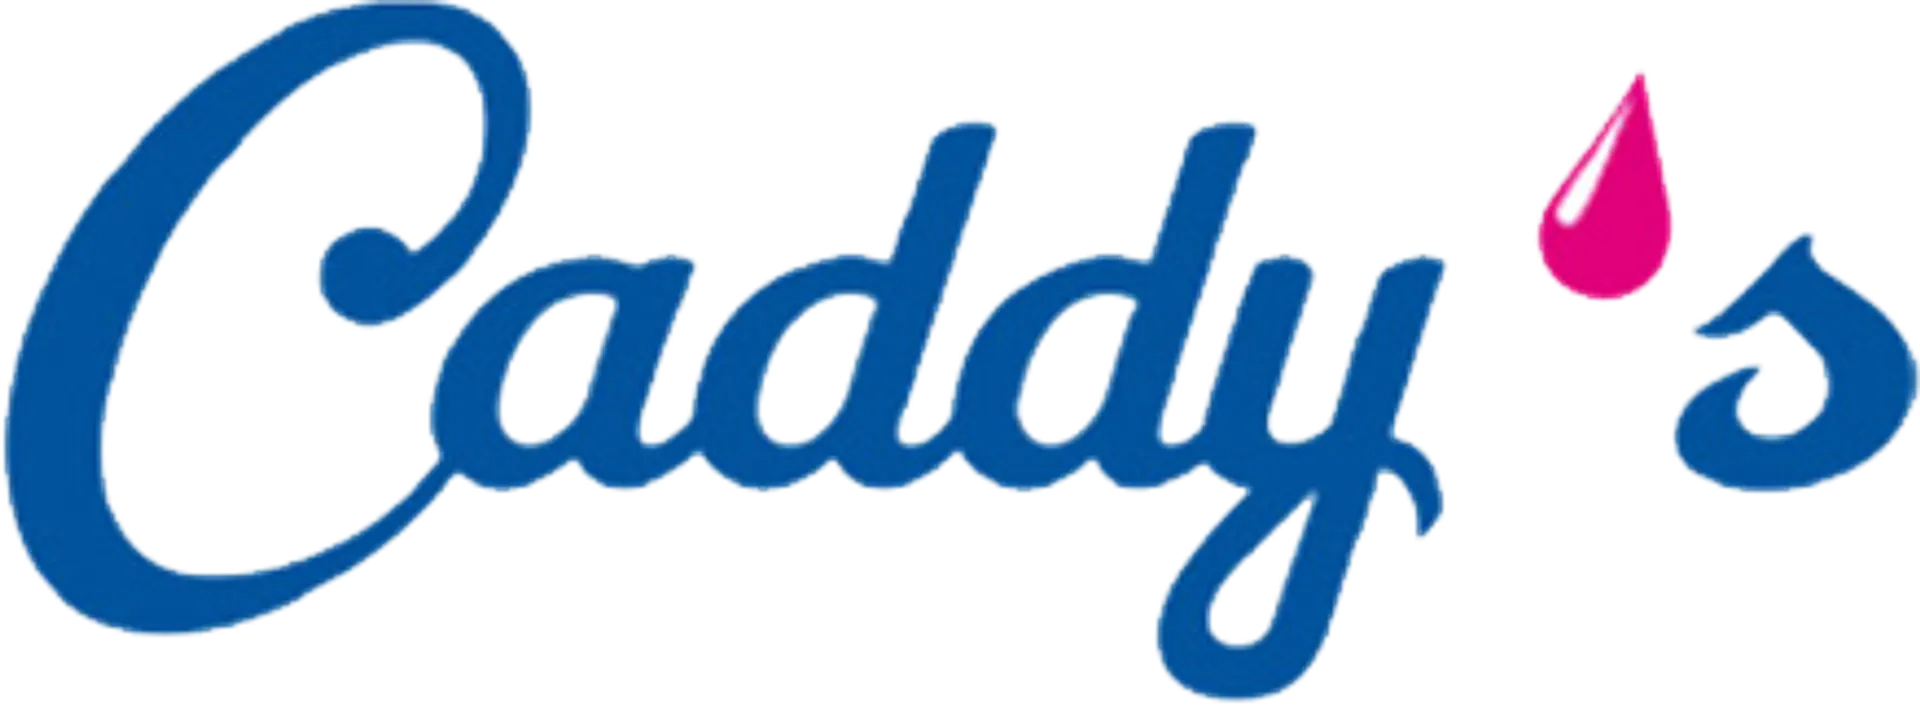 CADDY'S logo